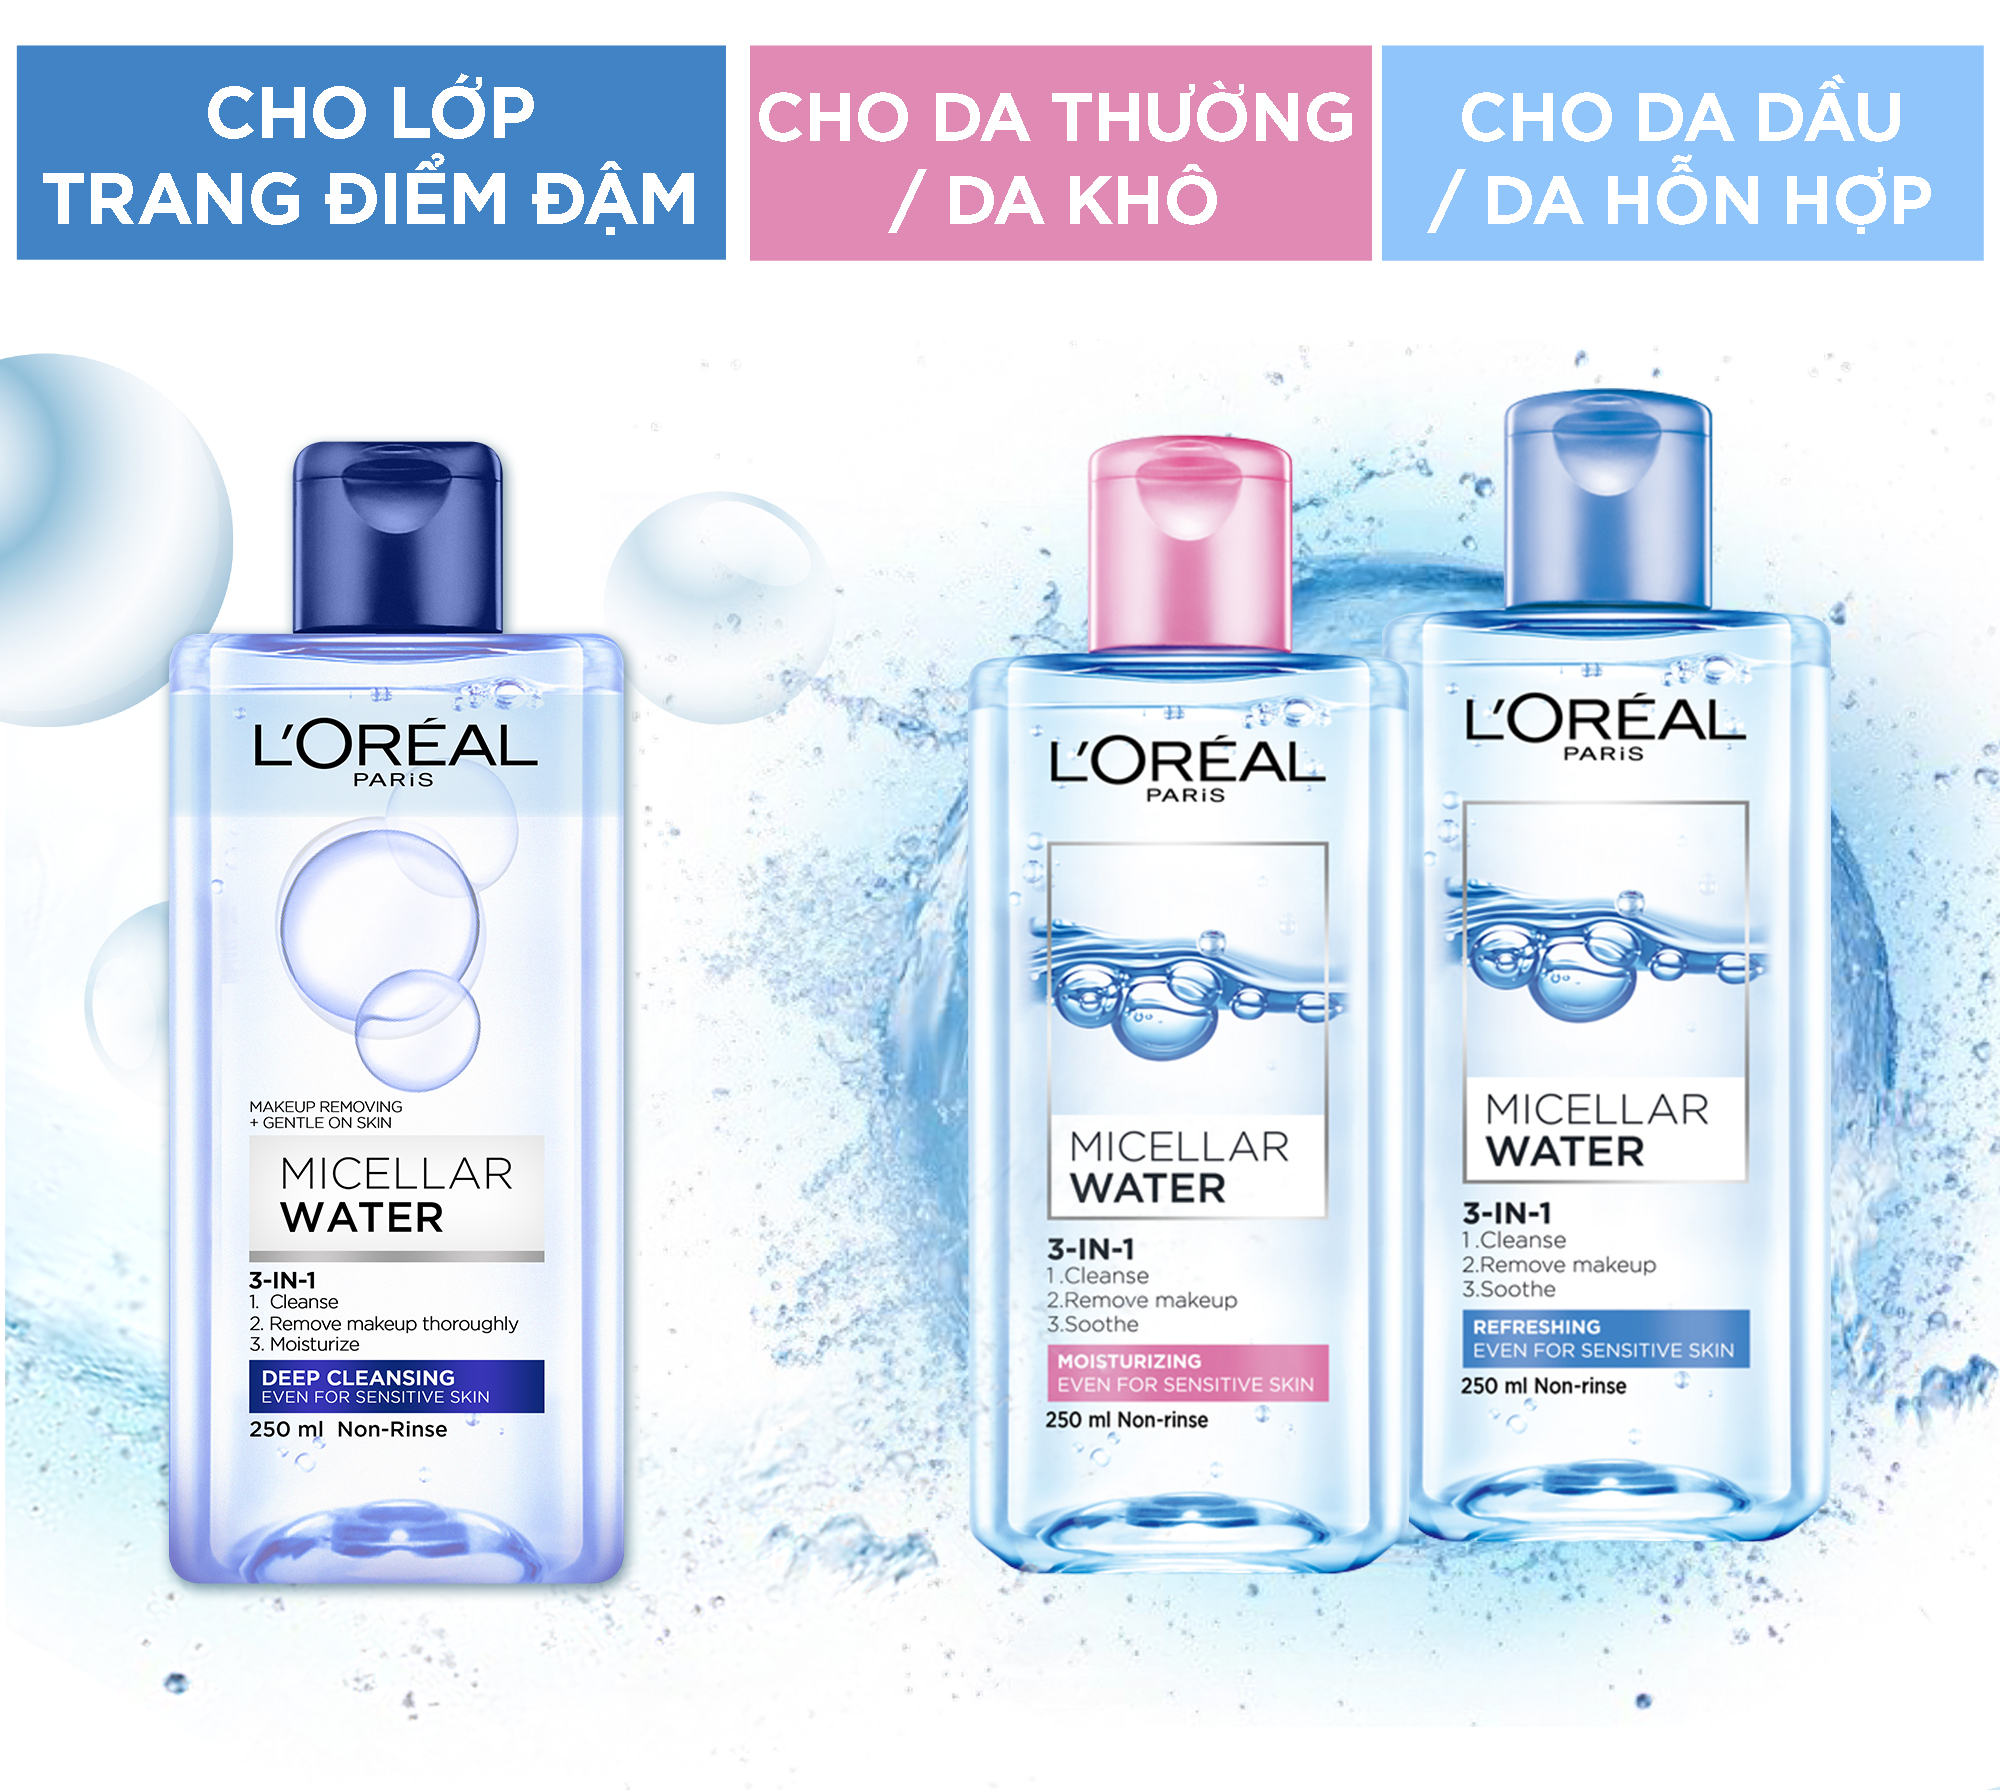 Nước Tẩy Trang L'oreal Micellar Water Refreshing Even For Sensitive Skin 95ml